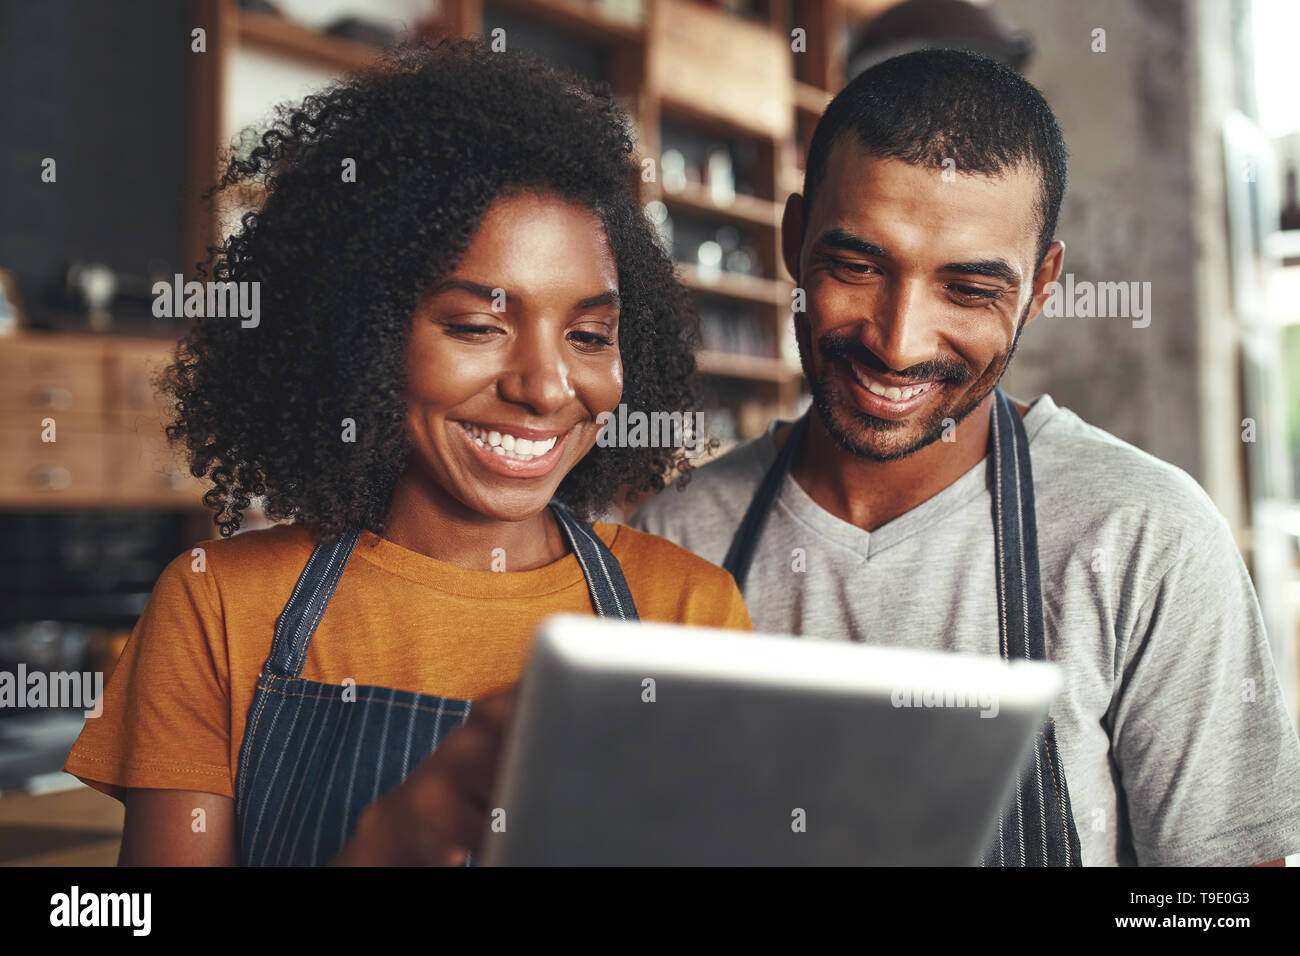 Smiling cafe owner in apron looking at digital tablet Banque D'Images